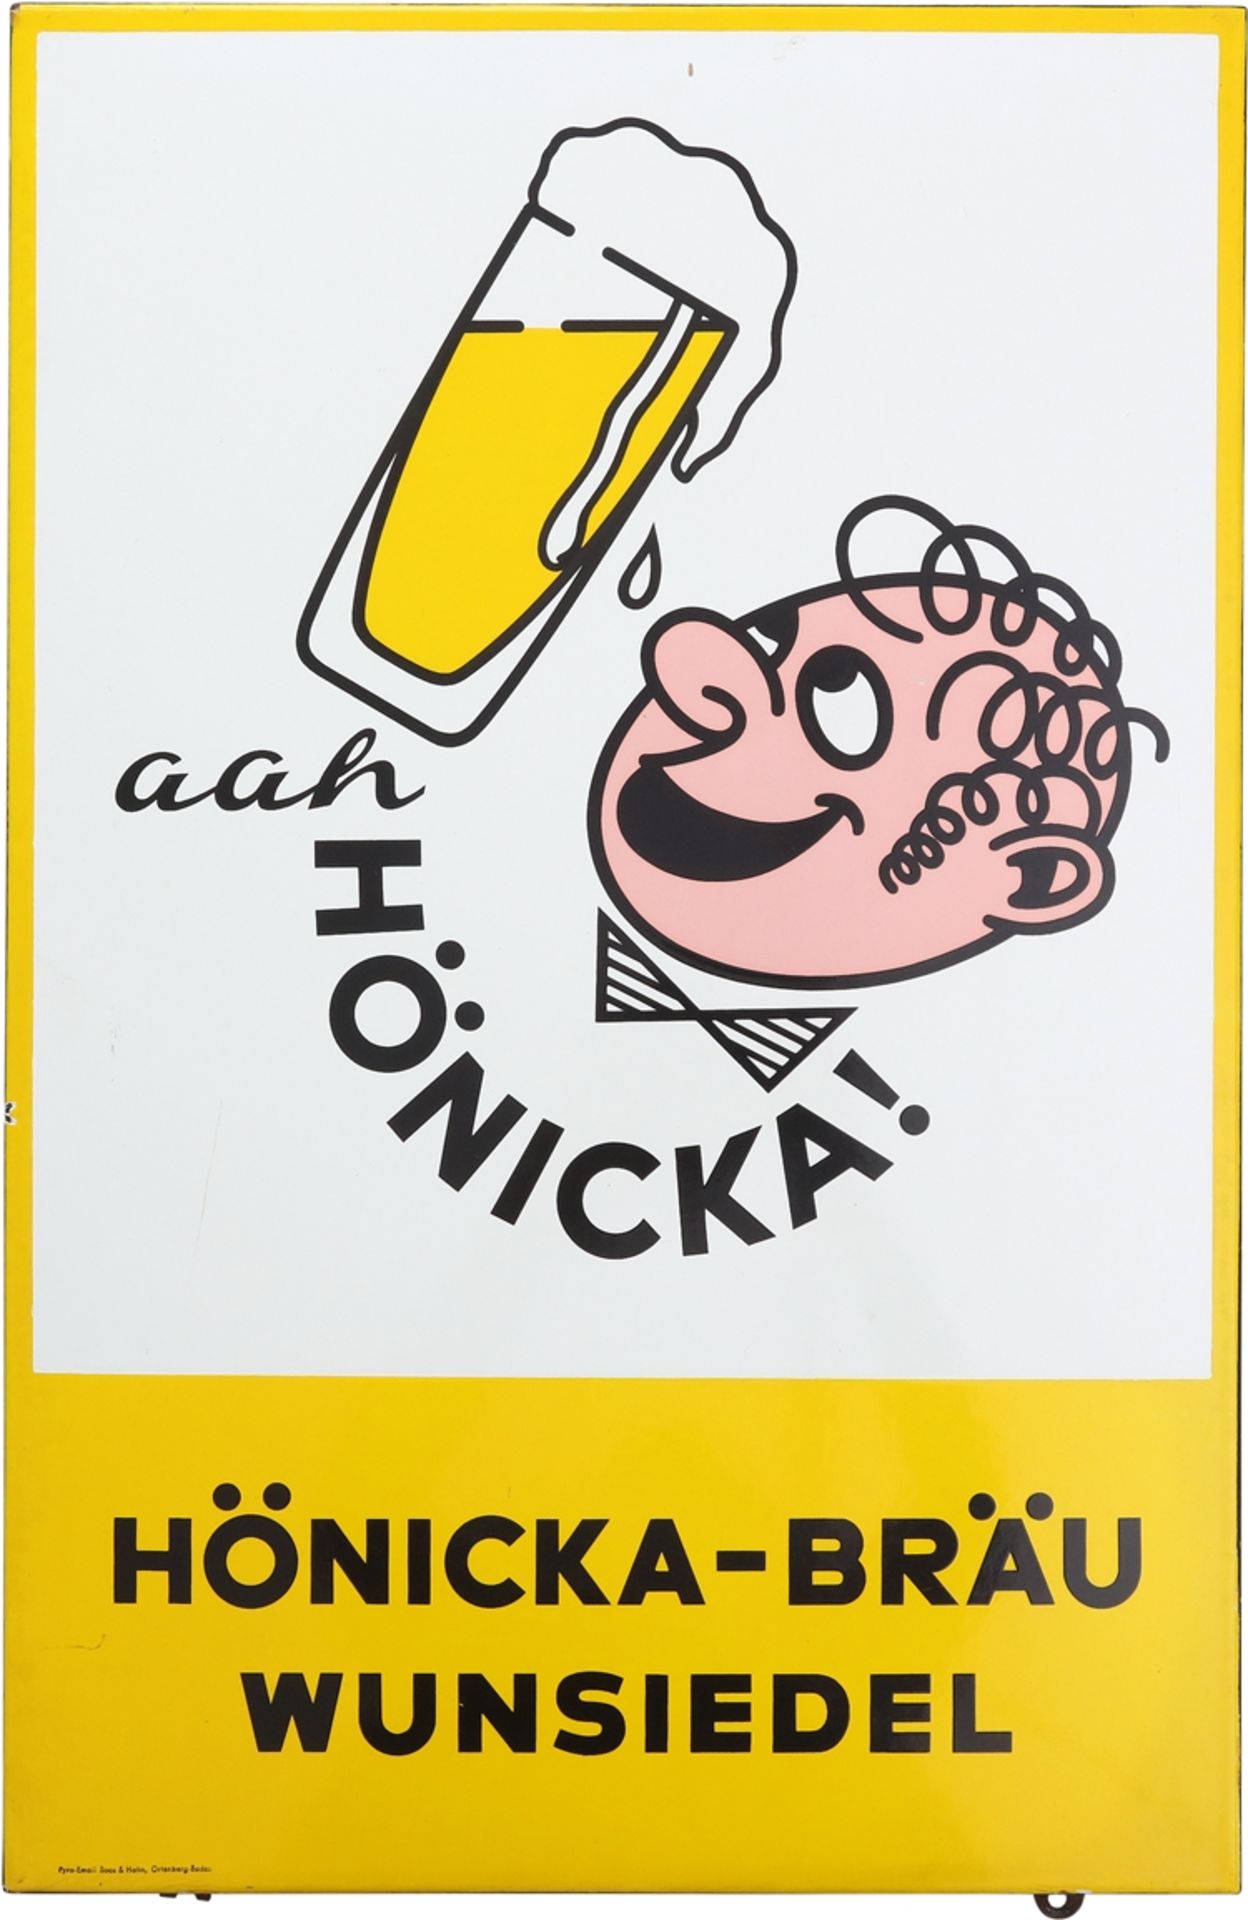 Emailschild Hönicka-Bräu,  Wunsiedel, um 1950